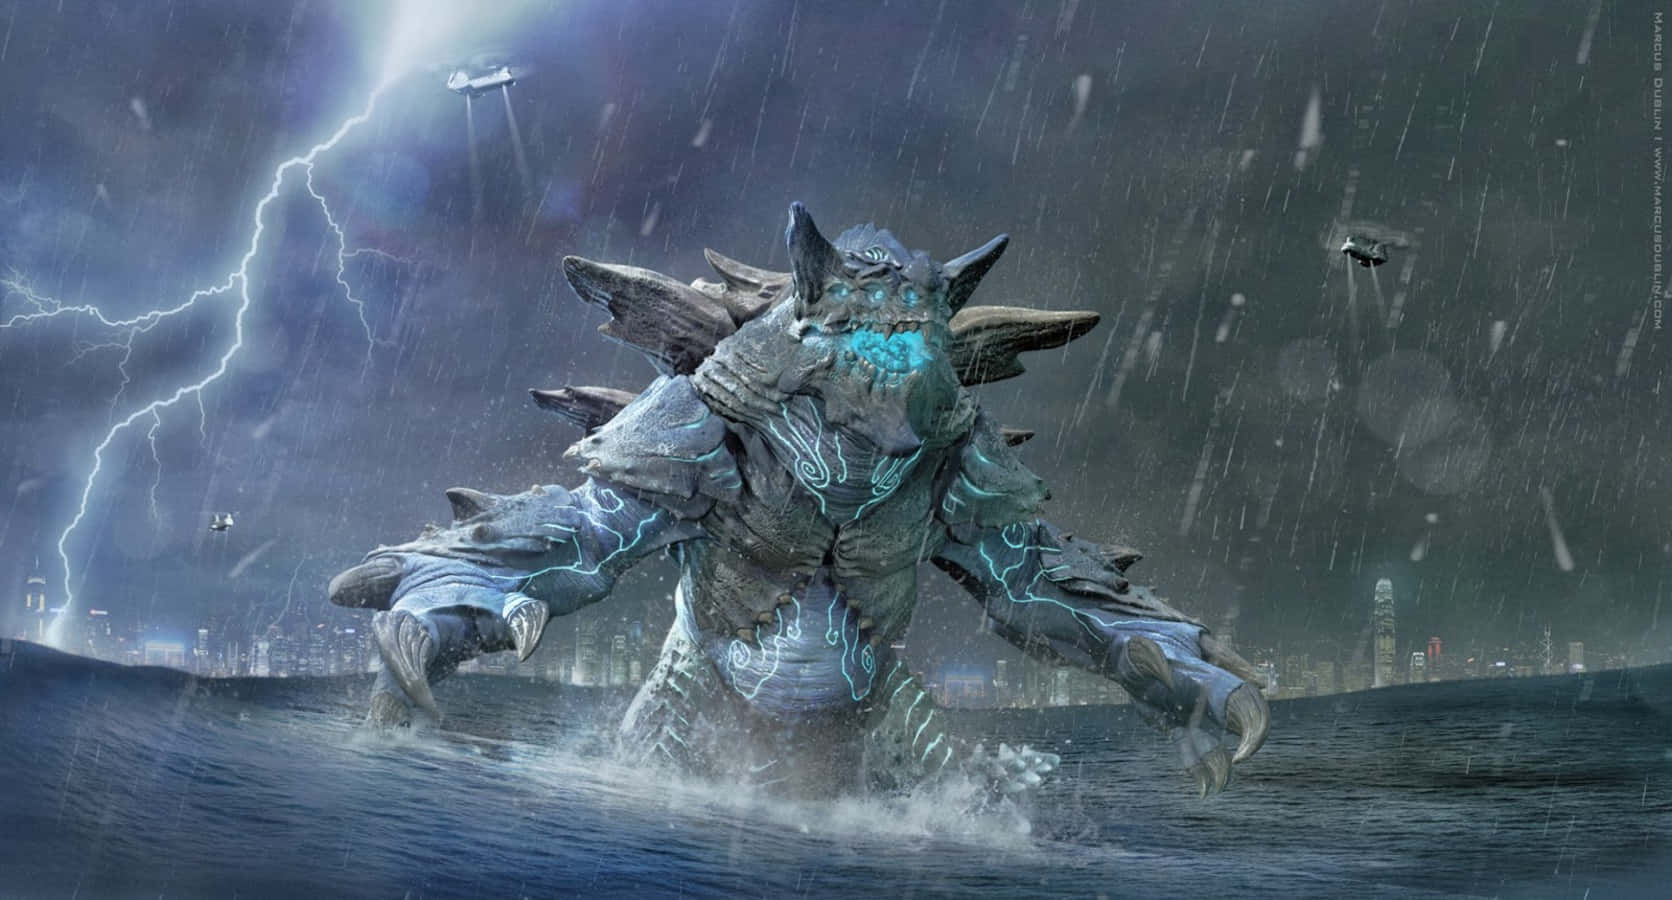 Caption: Monstrous Kaiju Battle in the City Wallpaper